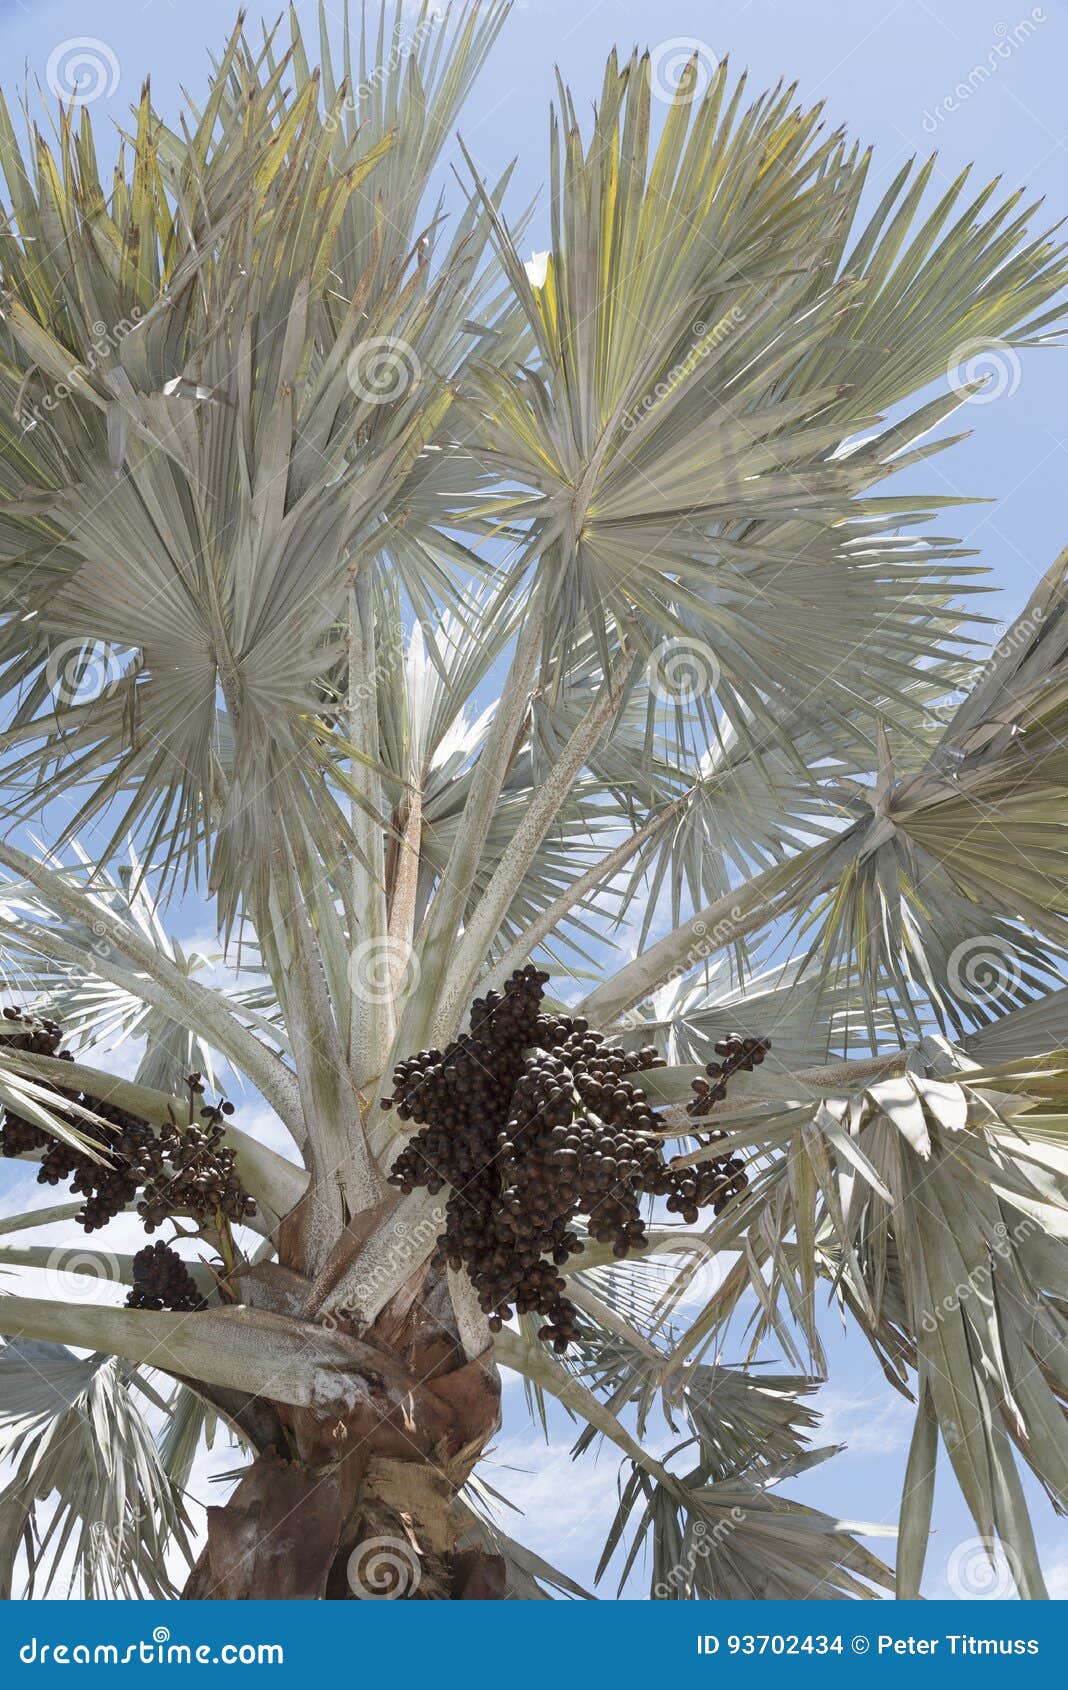 bismark palm and cluster of drupes